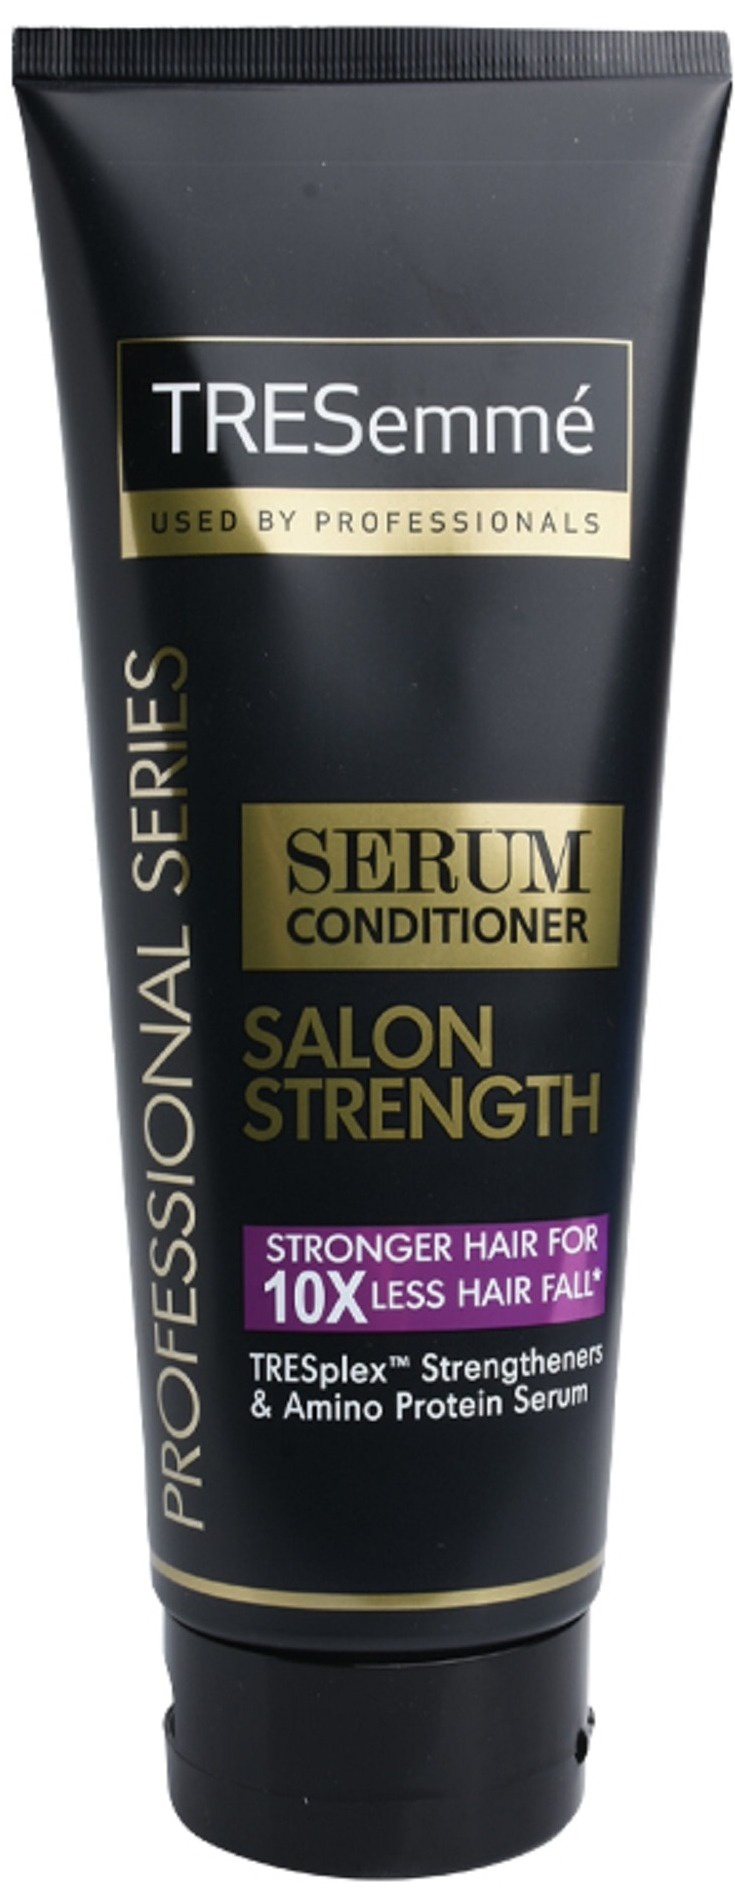 TRESemmé Serum Conditioner Salon Strength